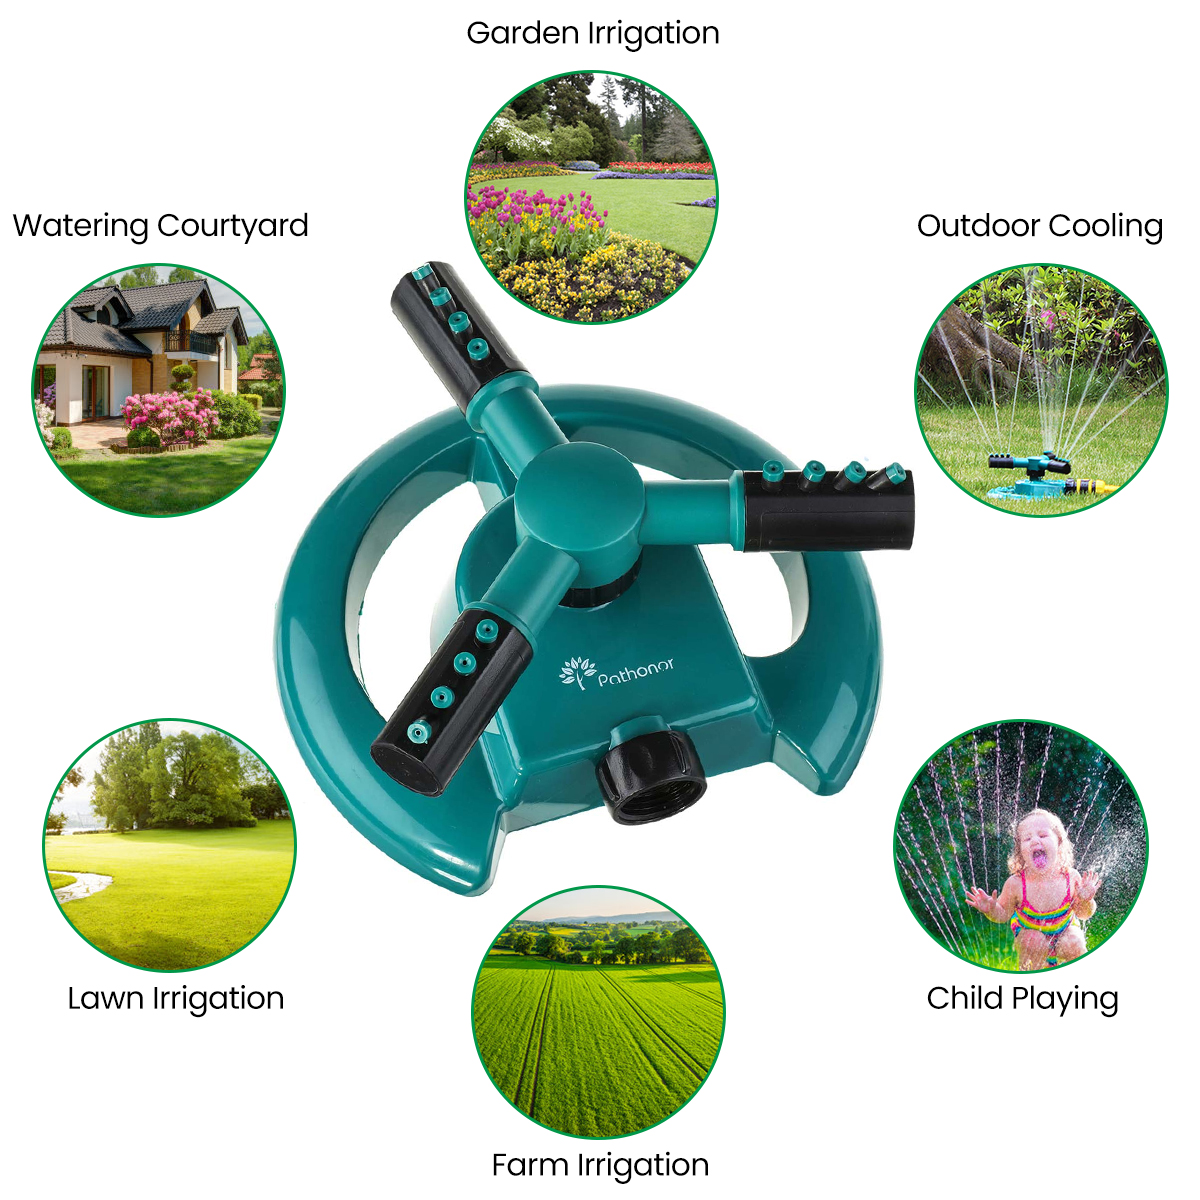 Lawn-Sprinkler-Automatic-Garden-Water-Sprinklers-Irrigation-Rotation-360deg-US-1720405-3